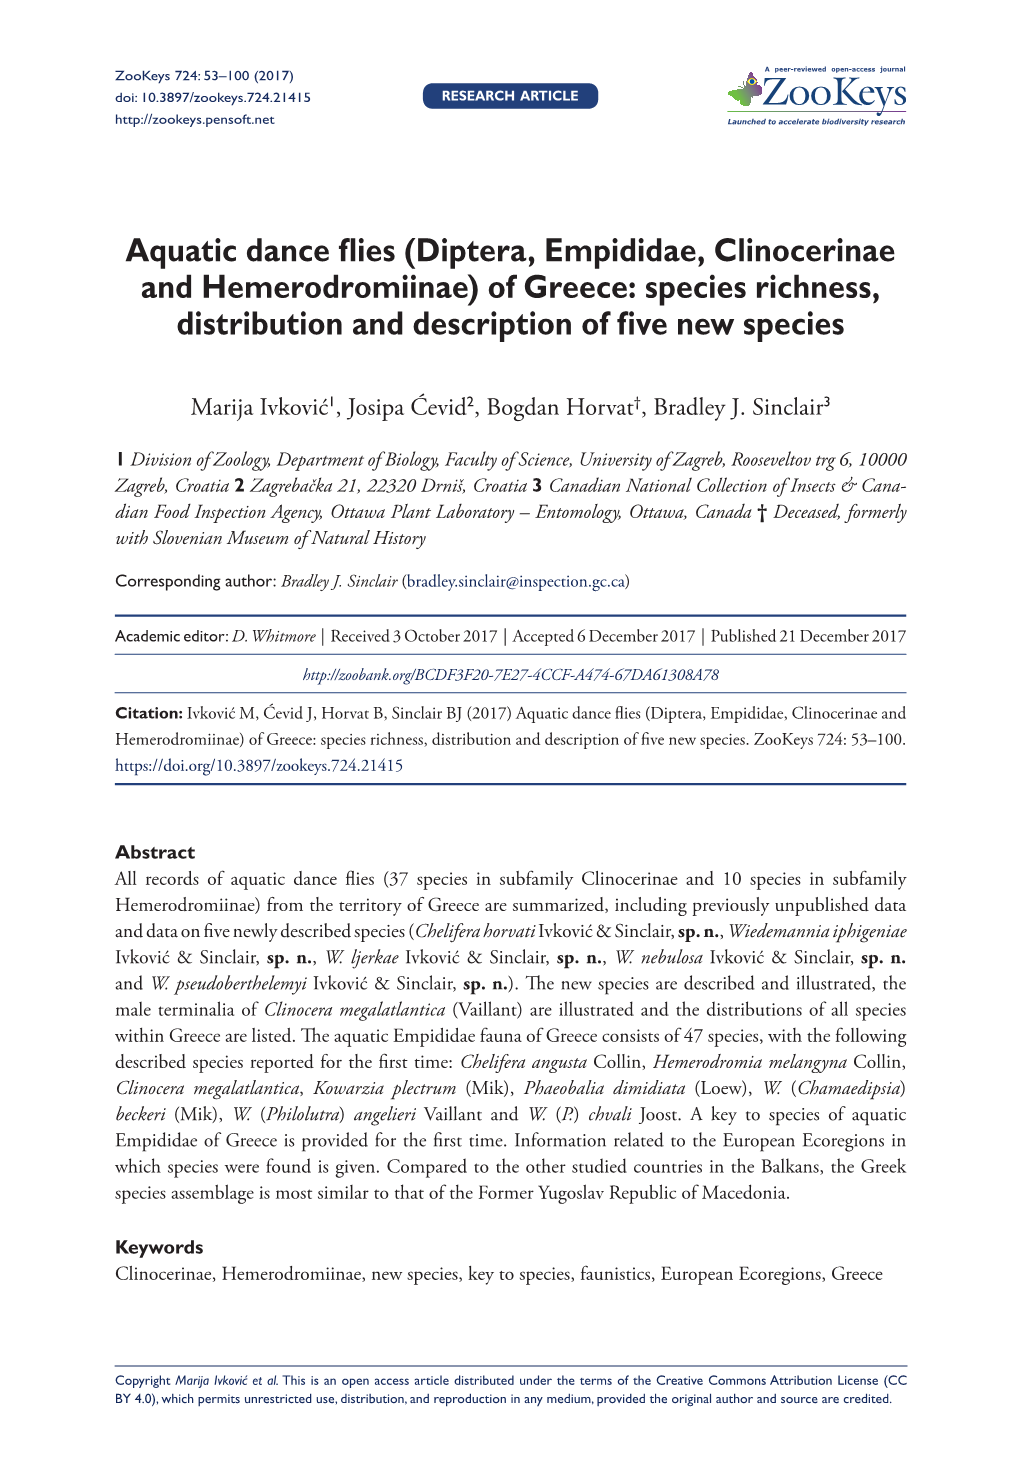 Aquatic Dance Flies (Diptera, Empididae, Clinocerinae and Hemerodromiinae) of Greece: Species Richness, Distribution and Description of Five New Species